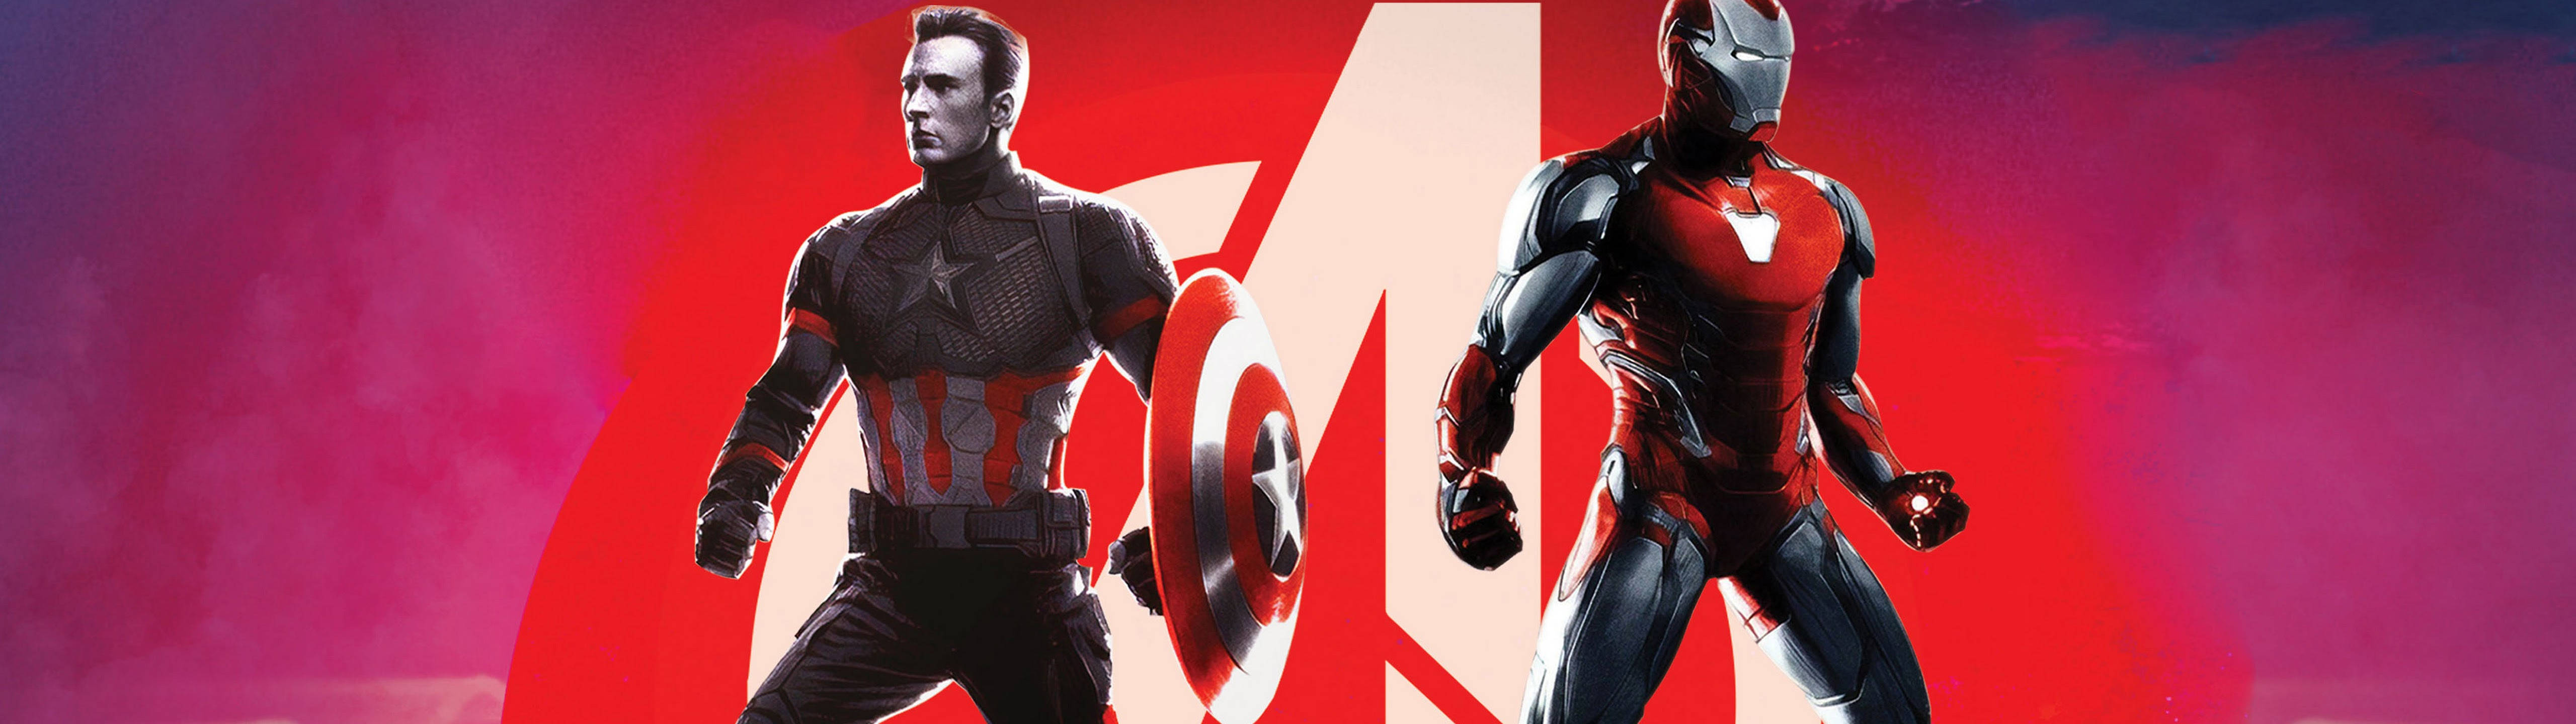 Marvel The Civil War 5120 X 1440 Background